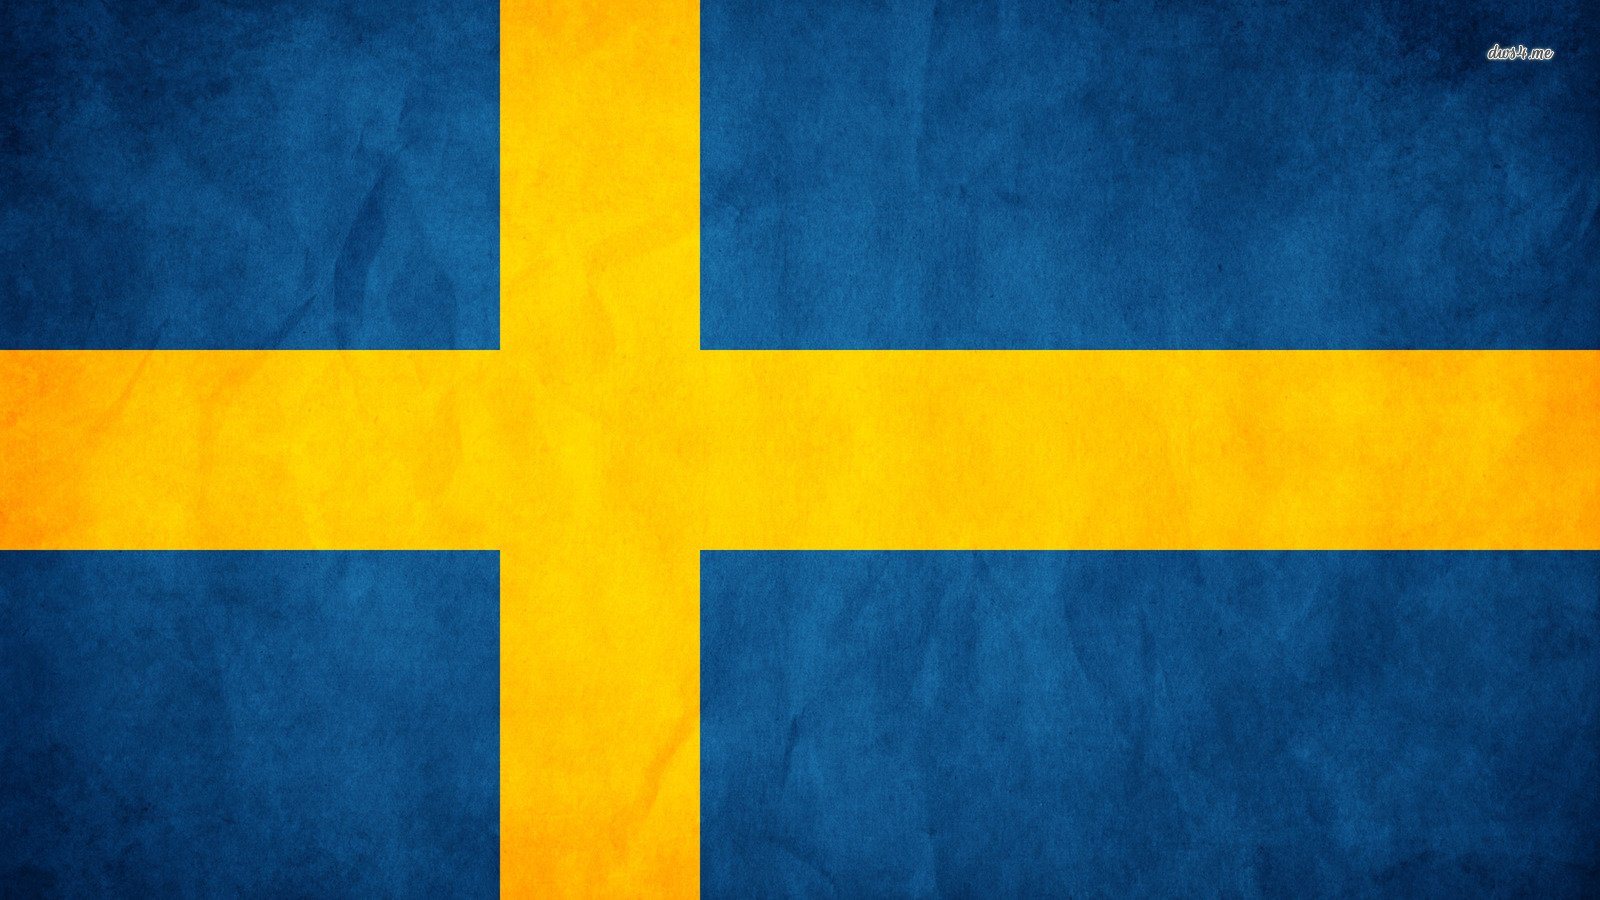 Baixar papel de parede para celular de Bandeira Da Suécia, Bandeiras, Miscelânea gratuito.